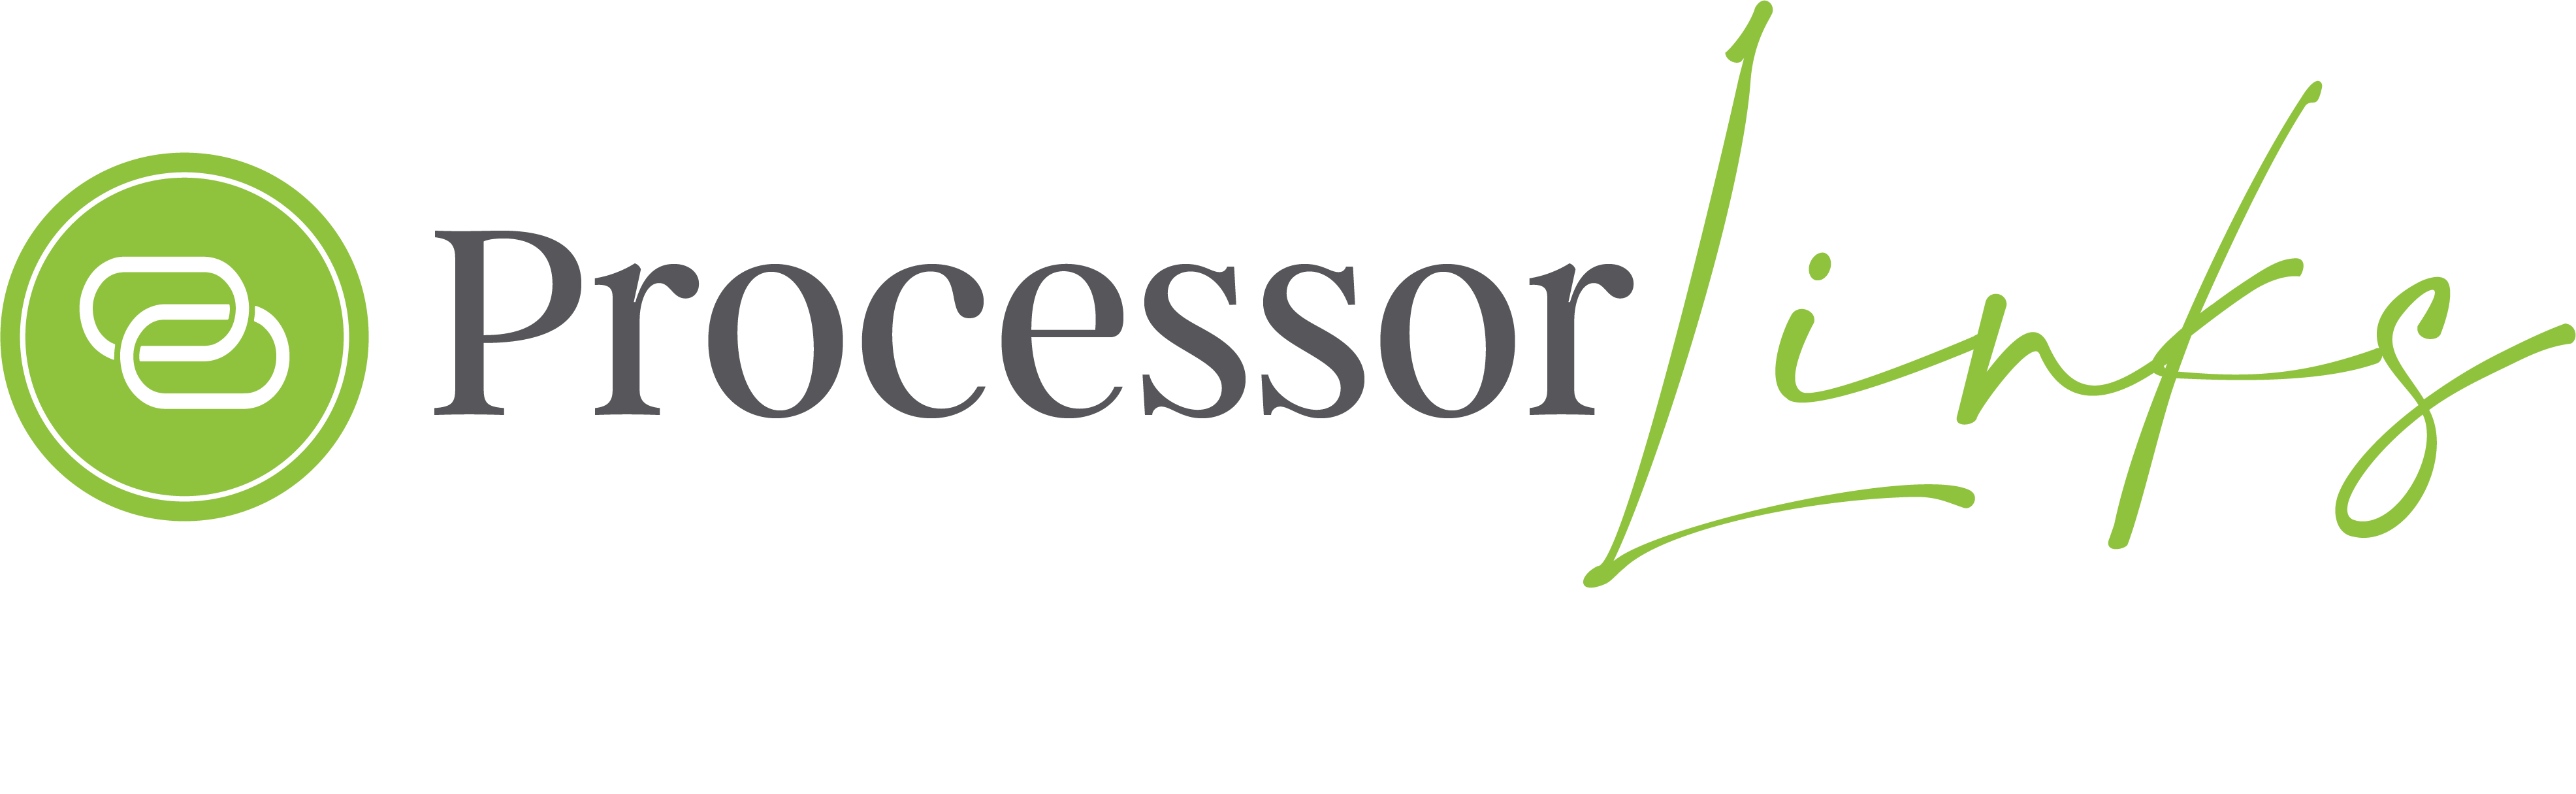 ProcessorLinks Logo